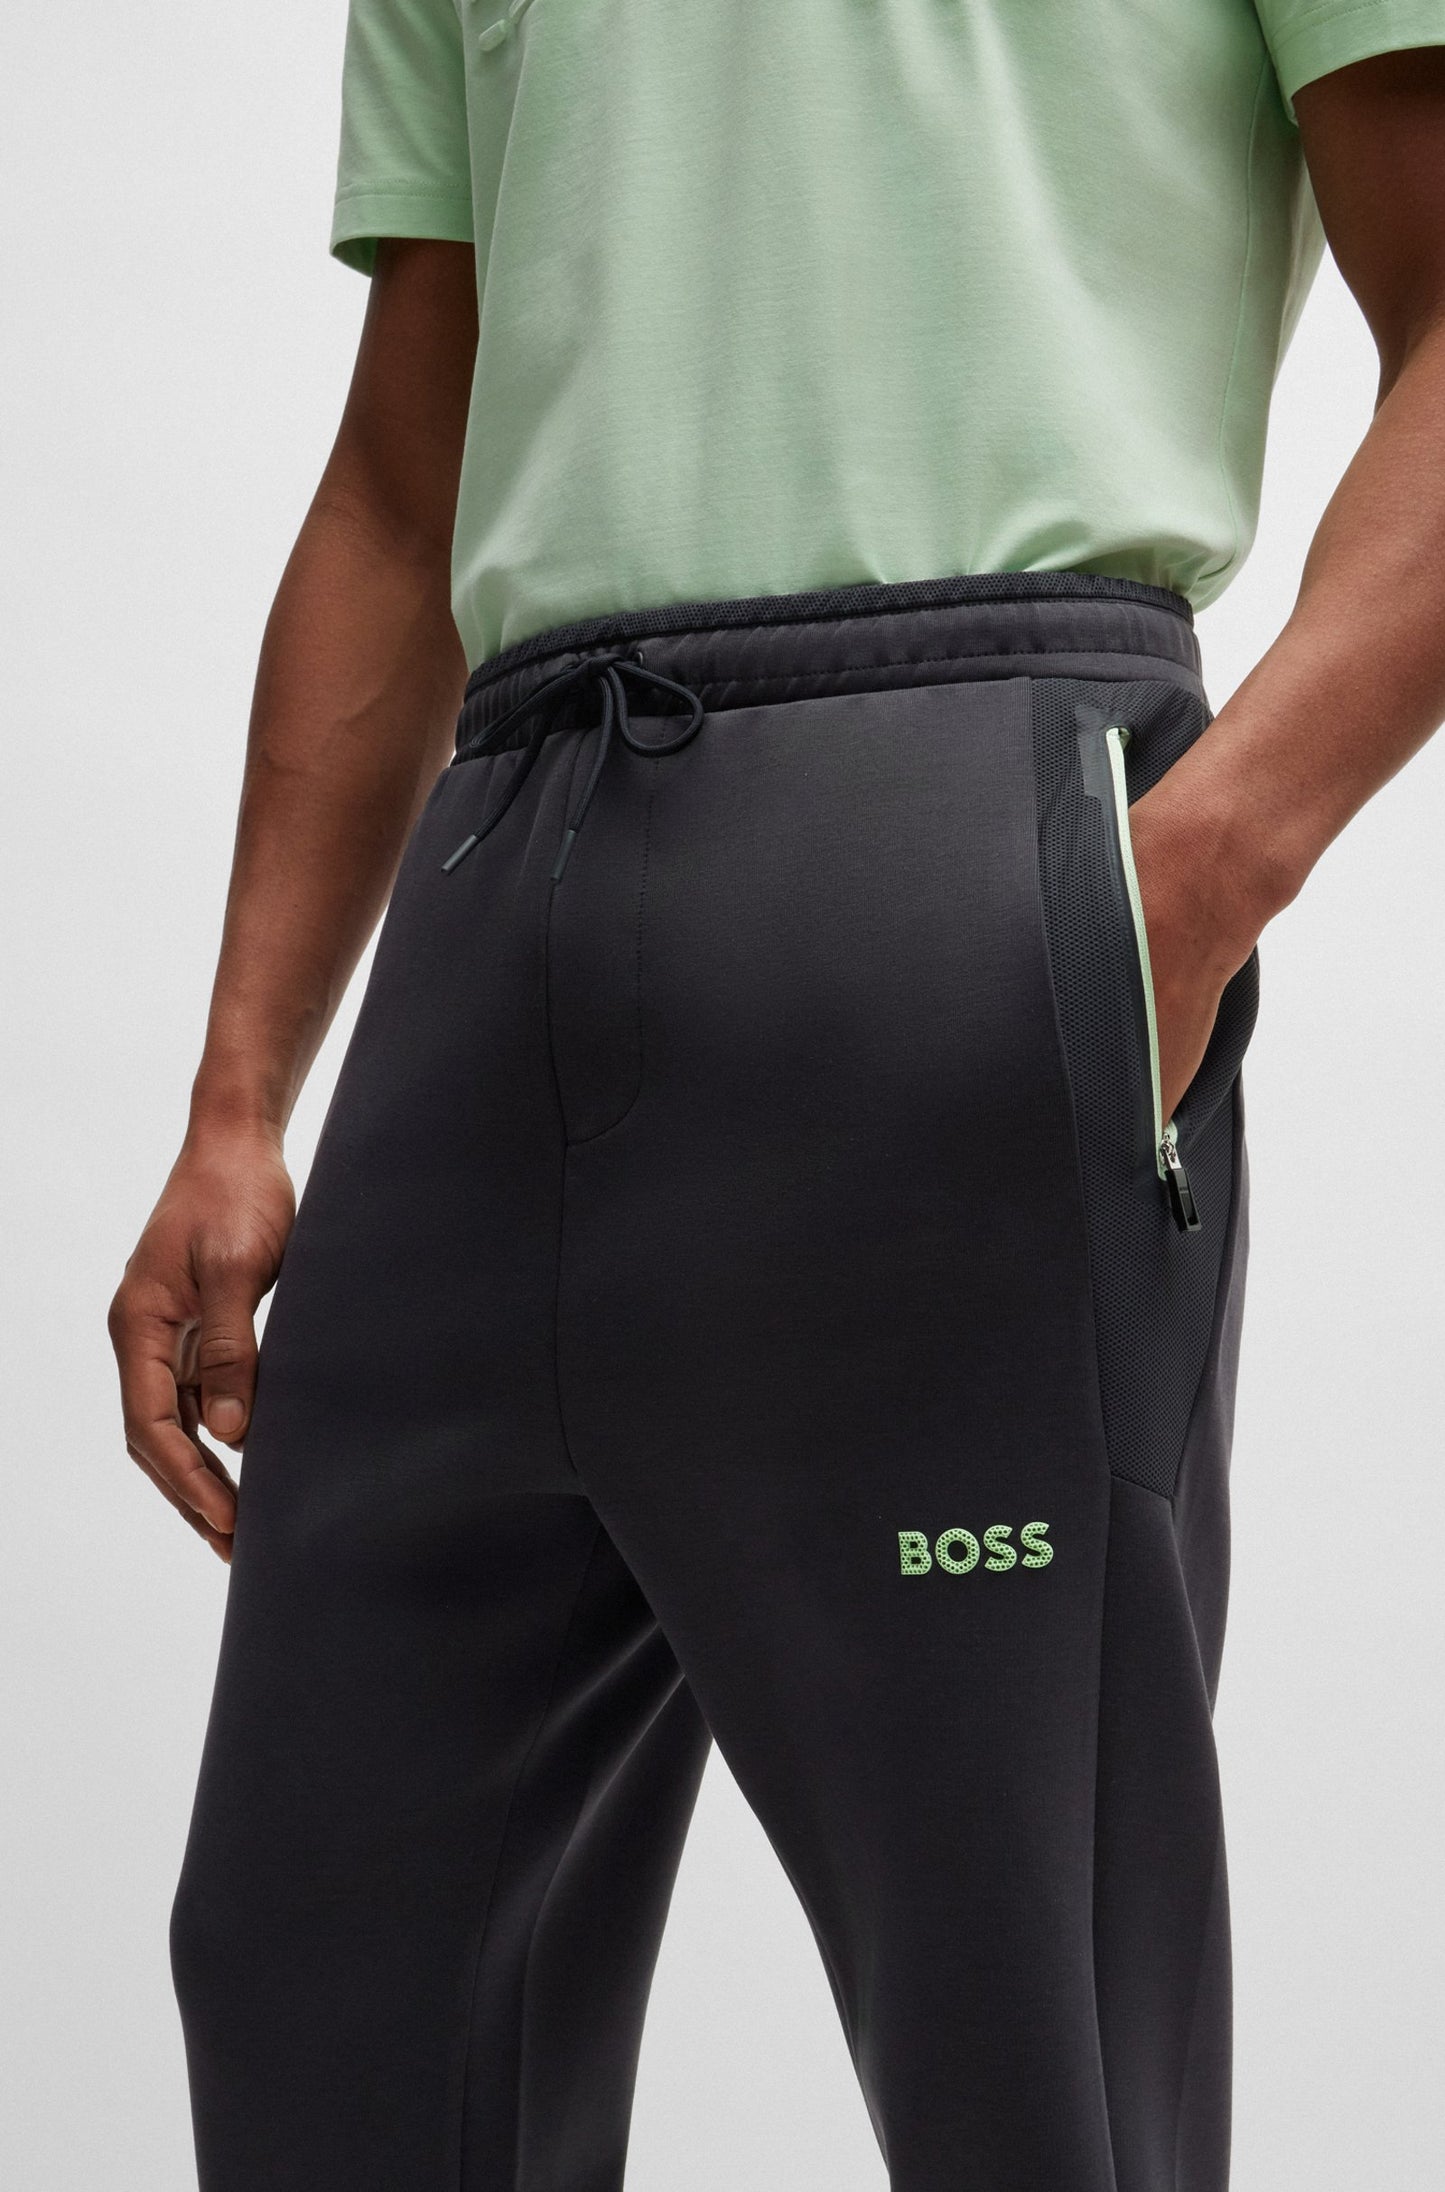 Boss Athleisure Men's Bottoms